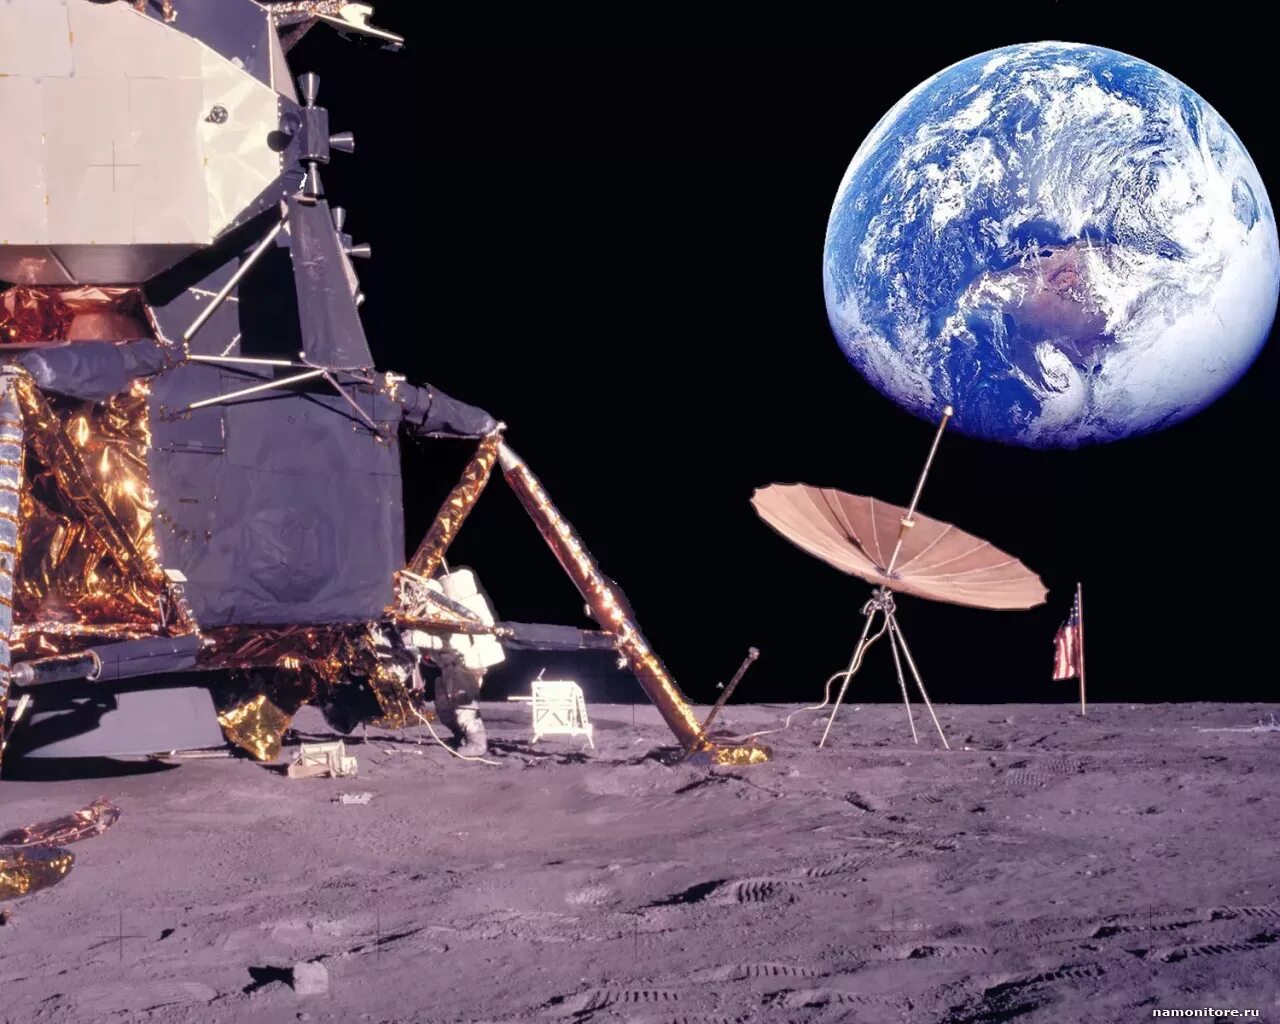 Lunar space. Аполлон 12 на Луне. Исследование космоса. Космические исследования. Космические аппараты на Луне.